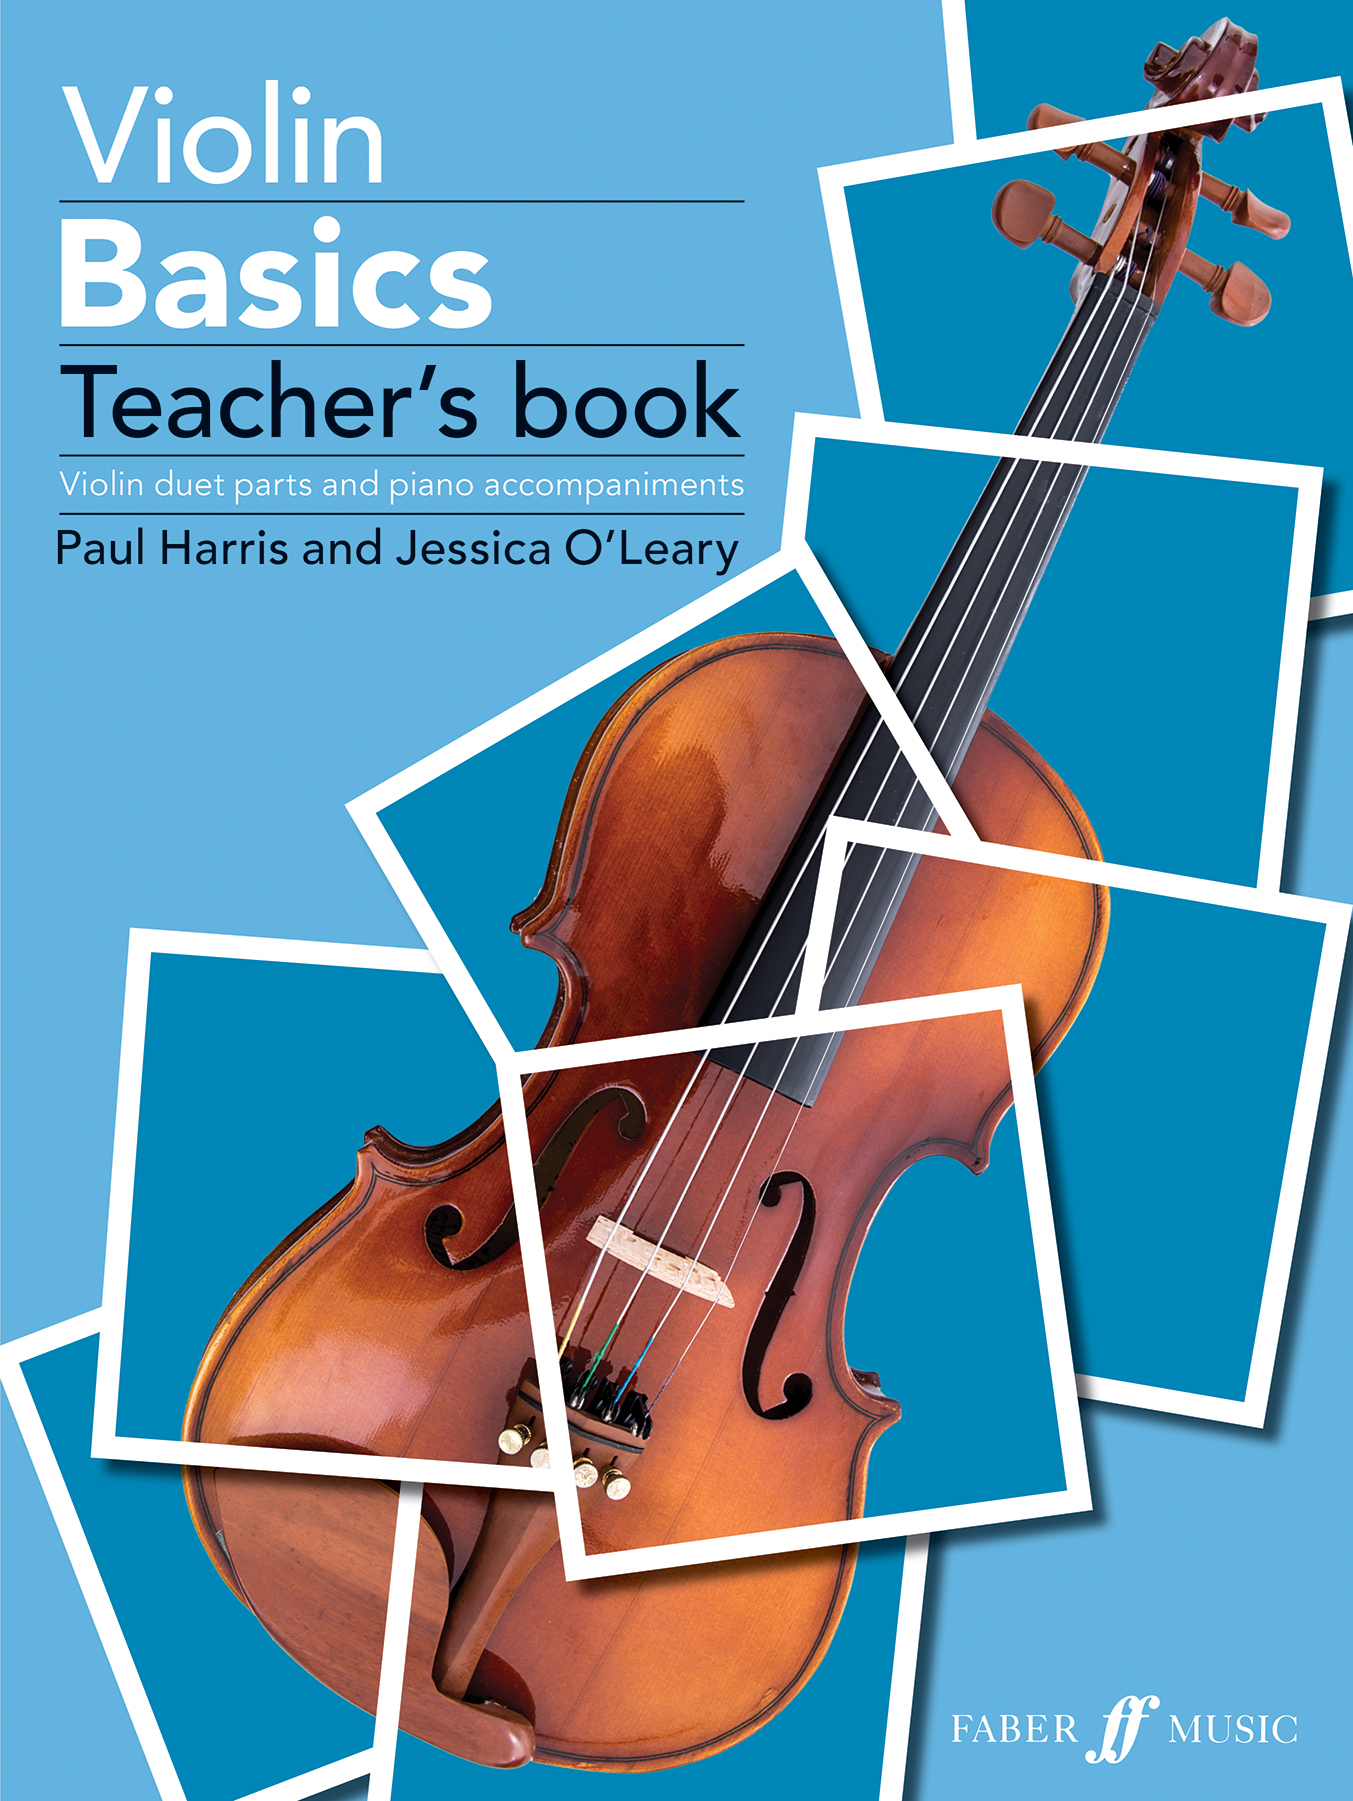 Violin Basics (Teacher's Book) (HARRIS PAUL / O'LEARY JESSICA)